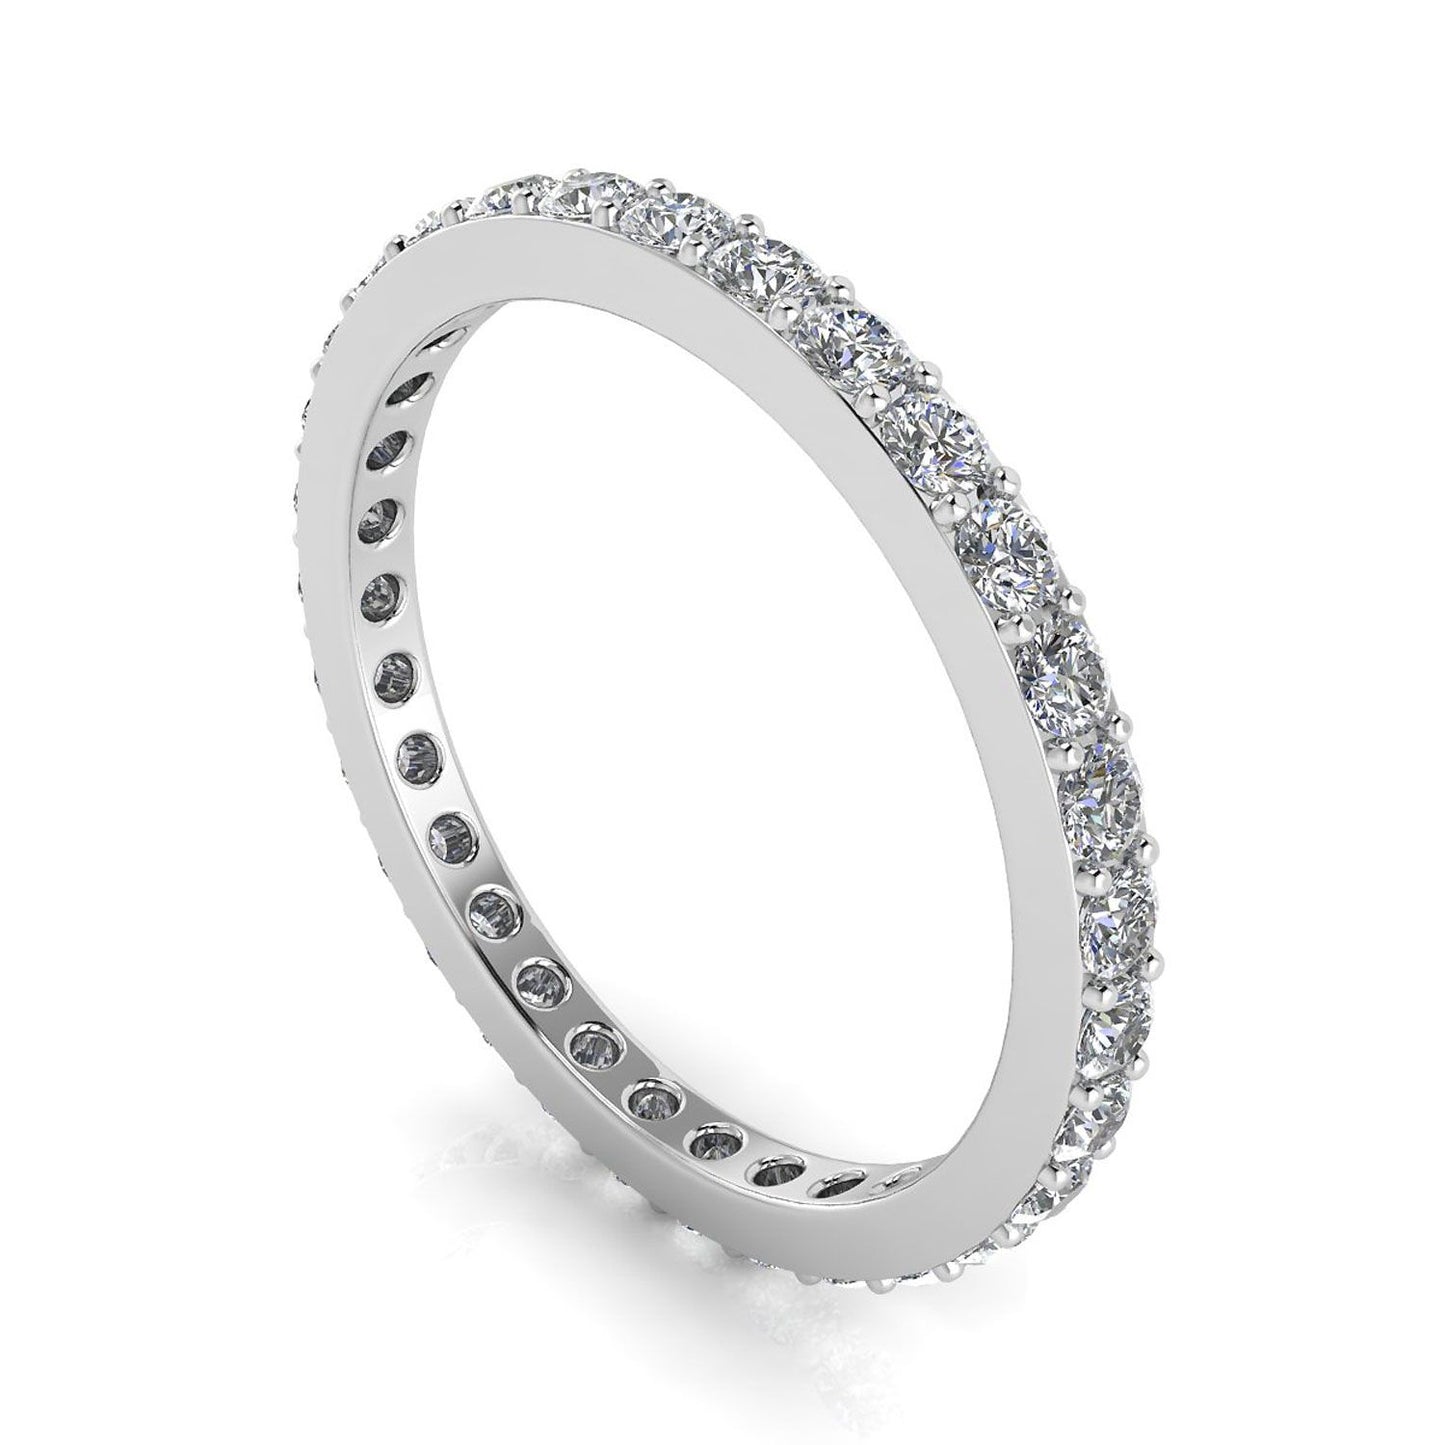 Round Brilliant Cut Diamond Pave Set Eternity Ring In Platinum  (0.74ct. Tw.) Ring Size 8.5